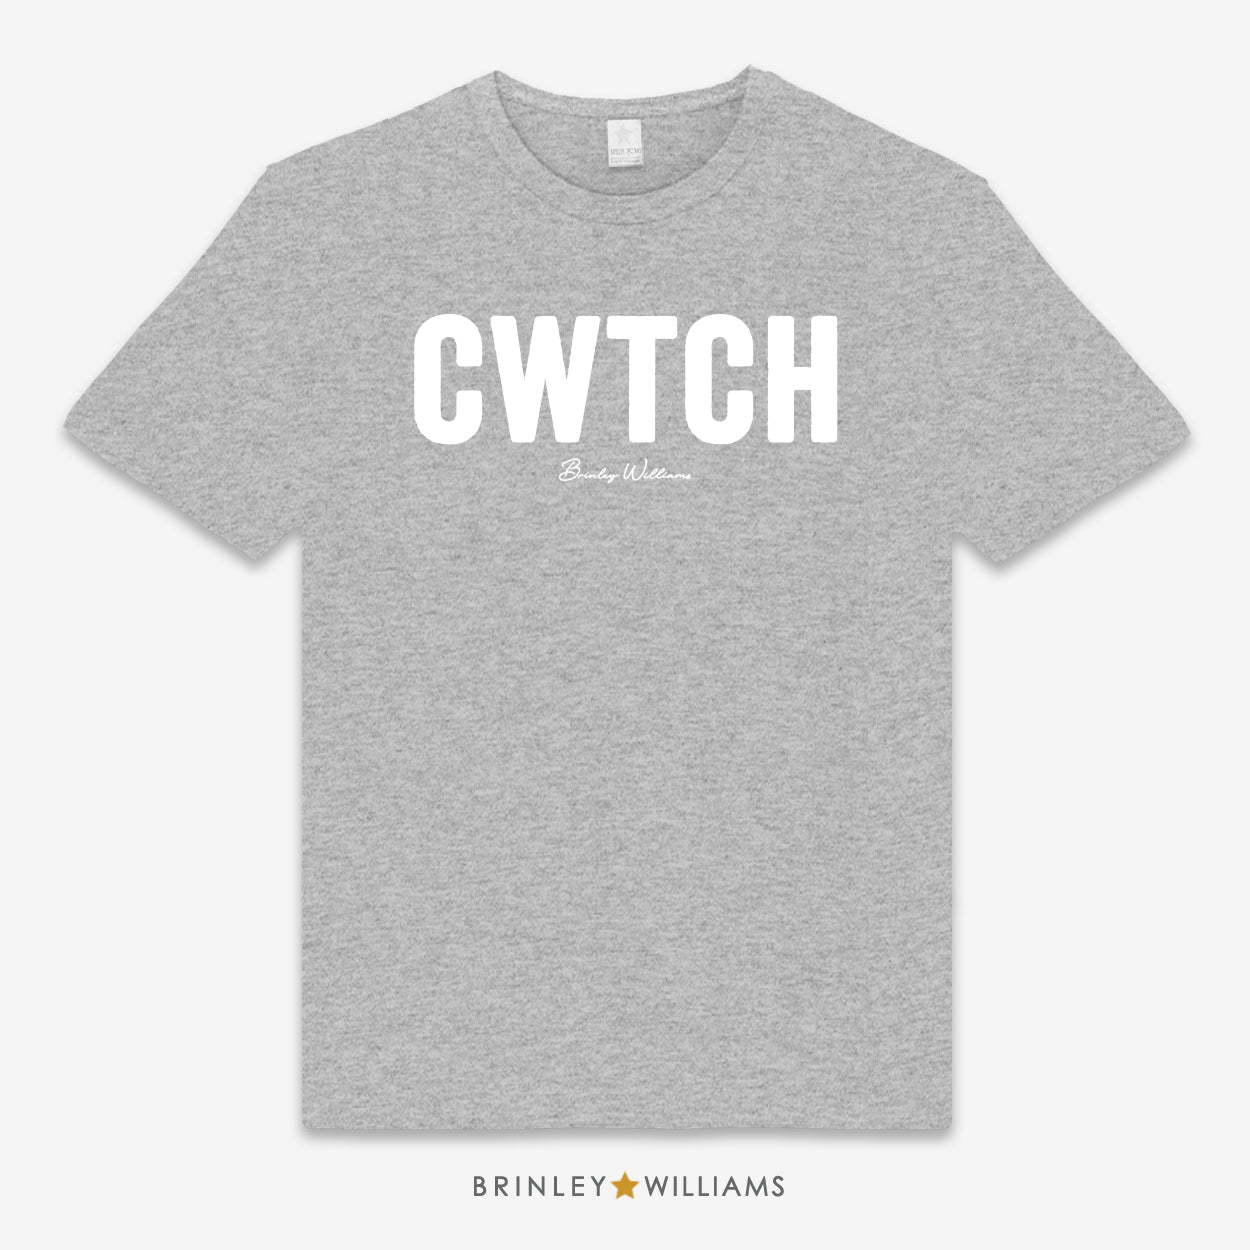 Big Cwtch Unisex Classic Welsh T-shirt - Heather Grey